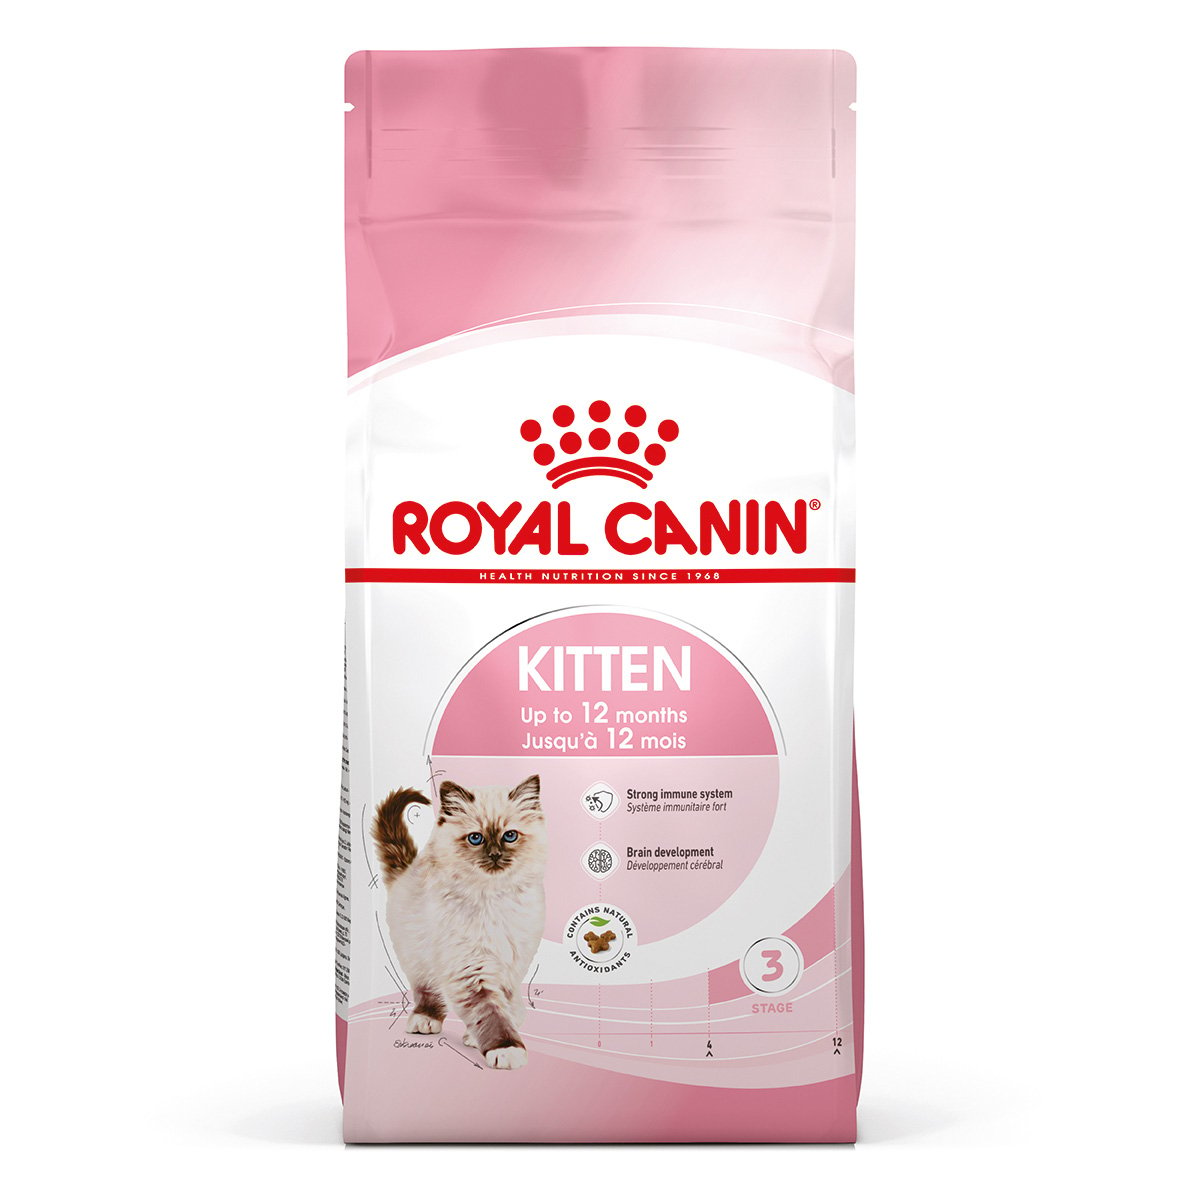 ROYAL CANIN KITTEN Trockenfutter für Kätzchen 2kg von Royal Canin